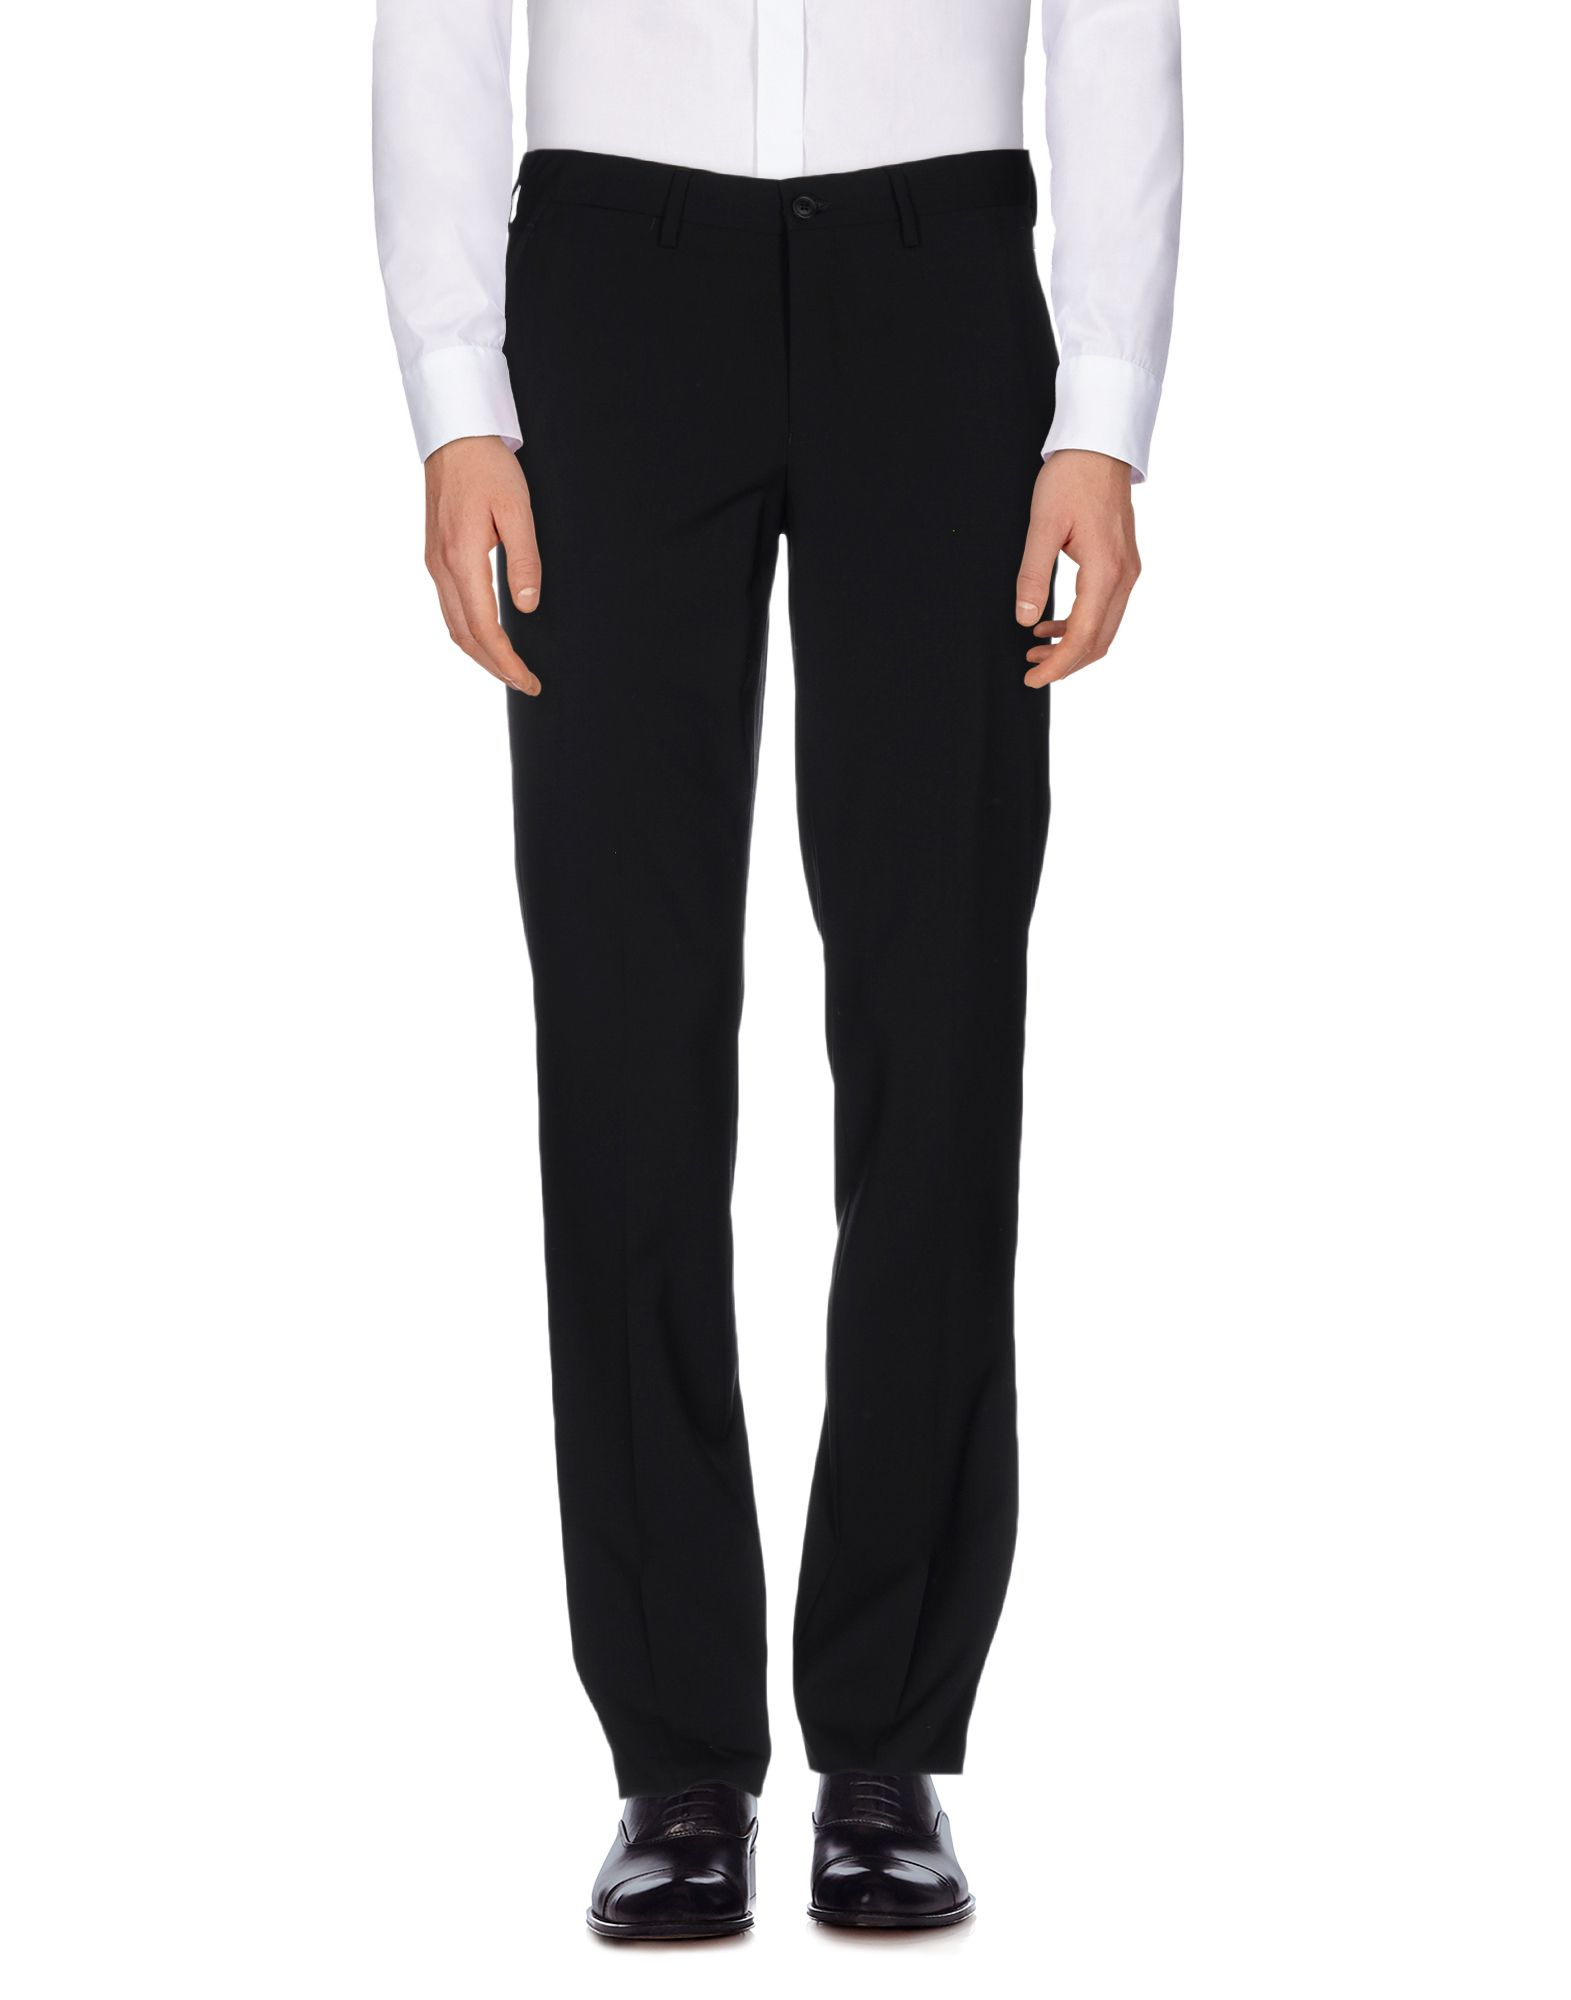 Emporio armani Casual Trouser in Black for Men - Save 51% | Lyst